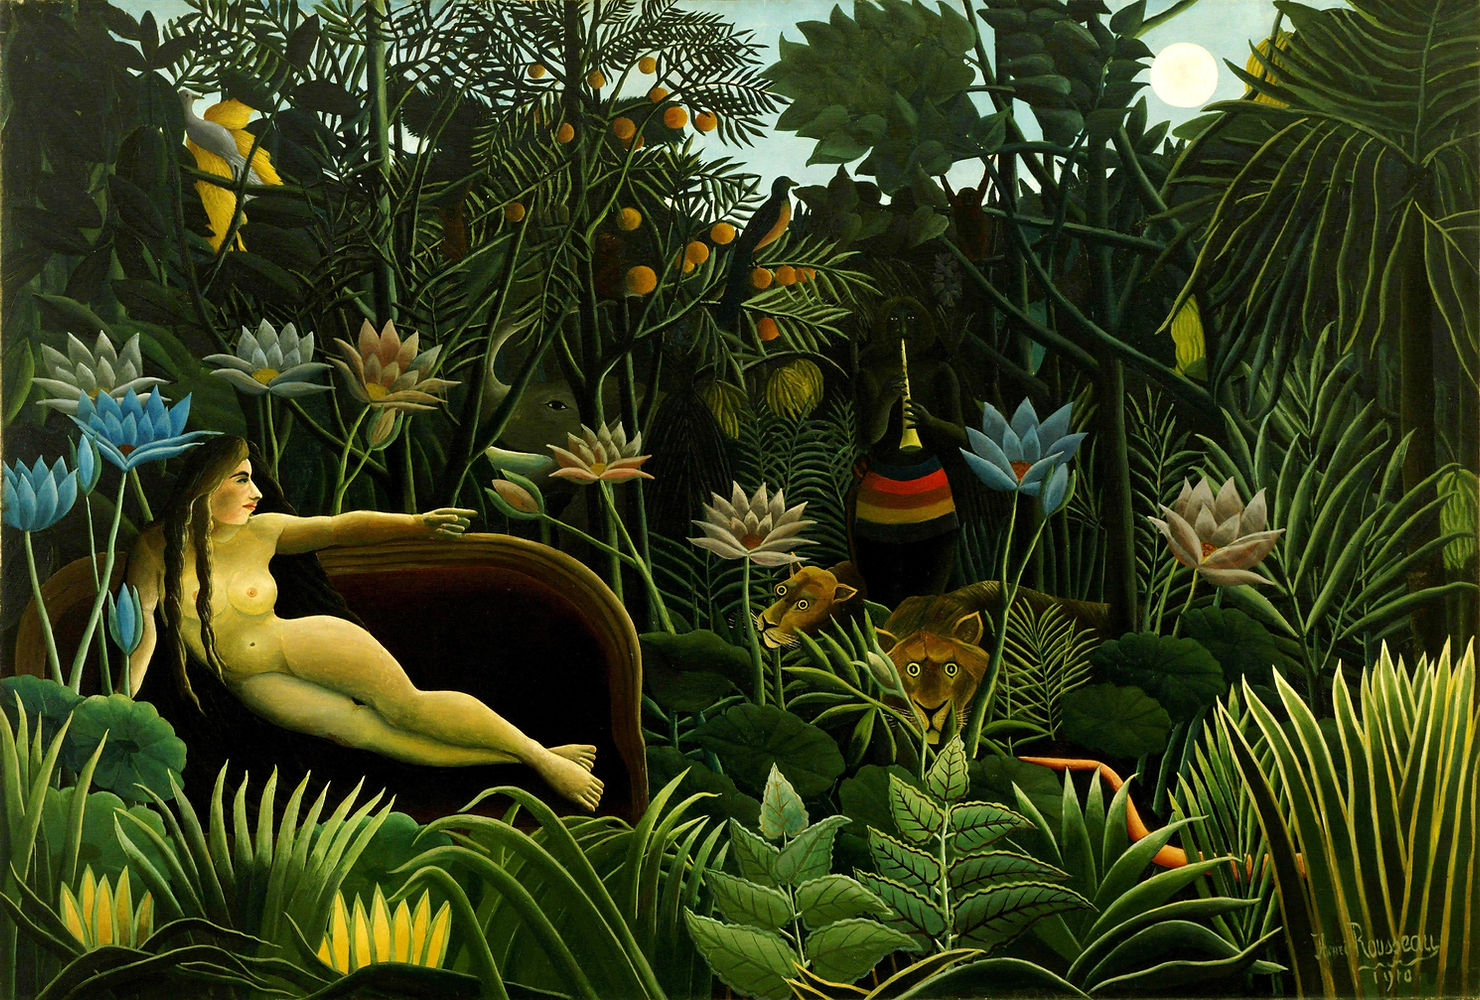 Henri Rousseau "Il sogno" 1910 Museum of Modern Art di New York